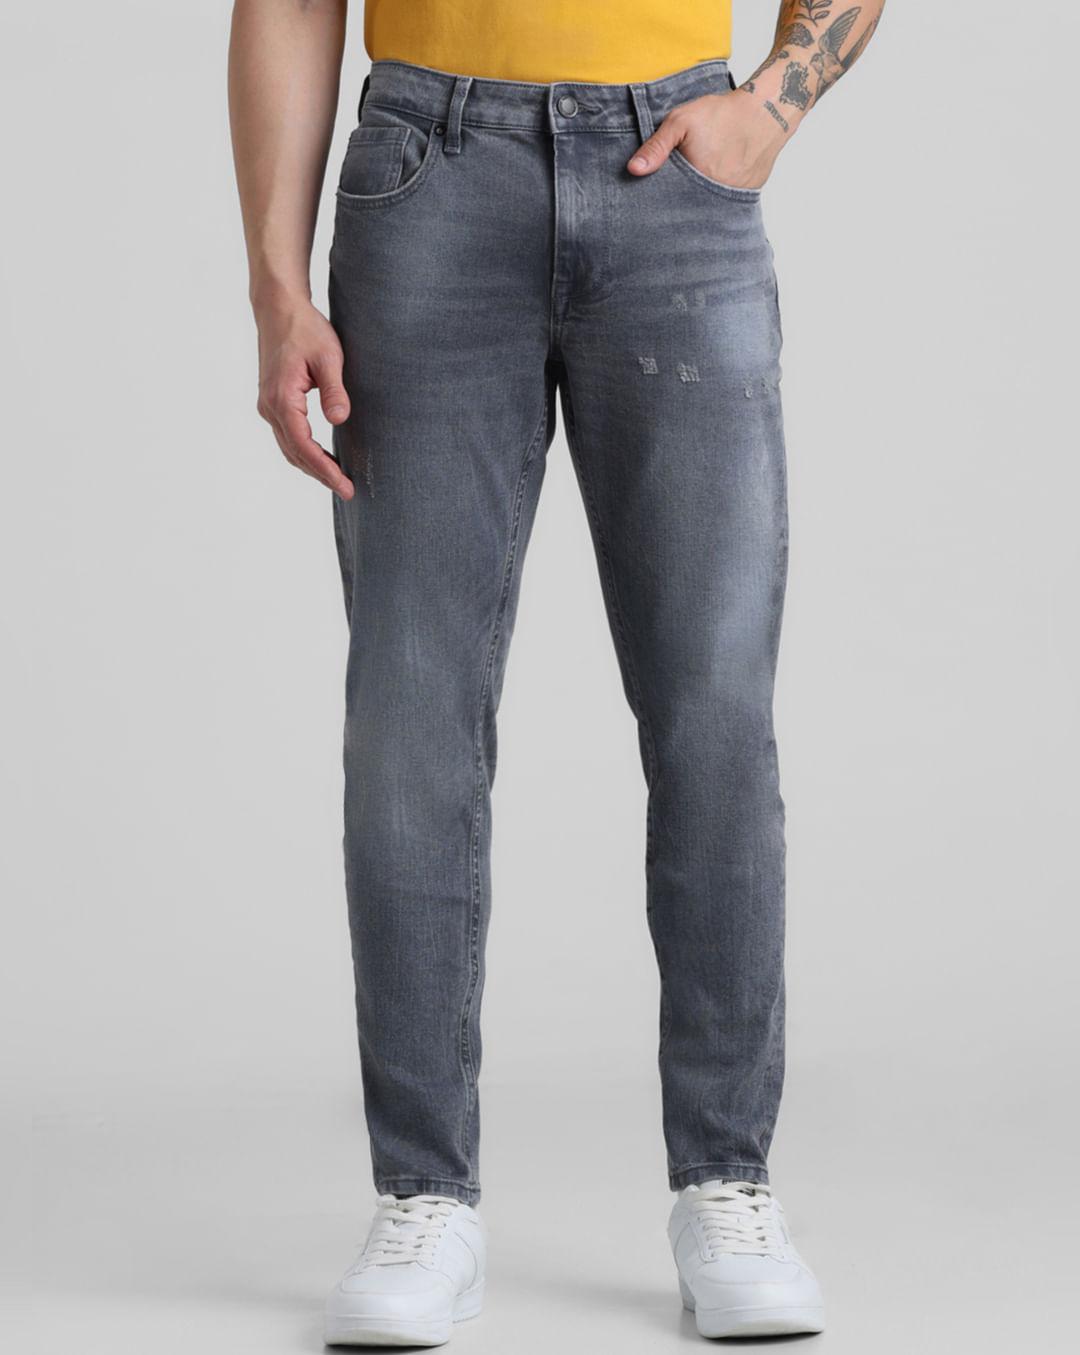 grey low rise distressed slim jeans